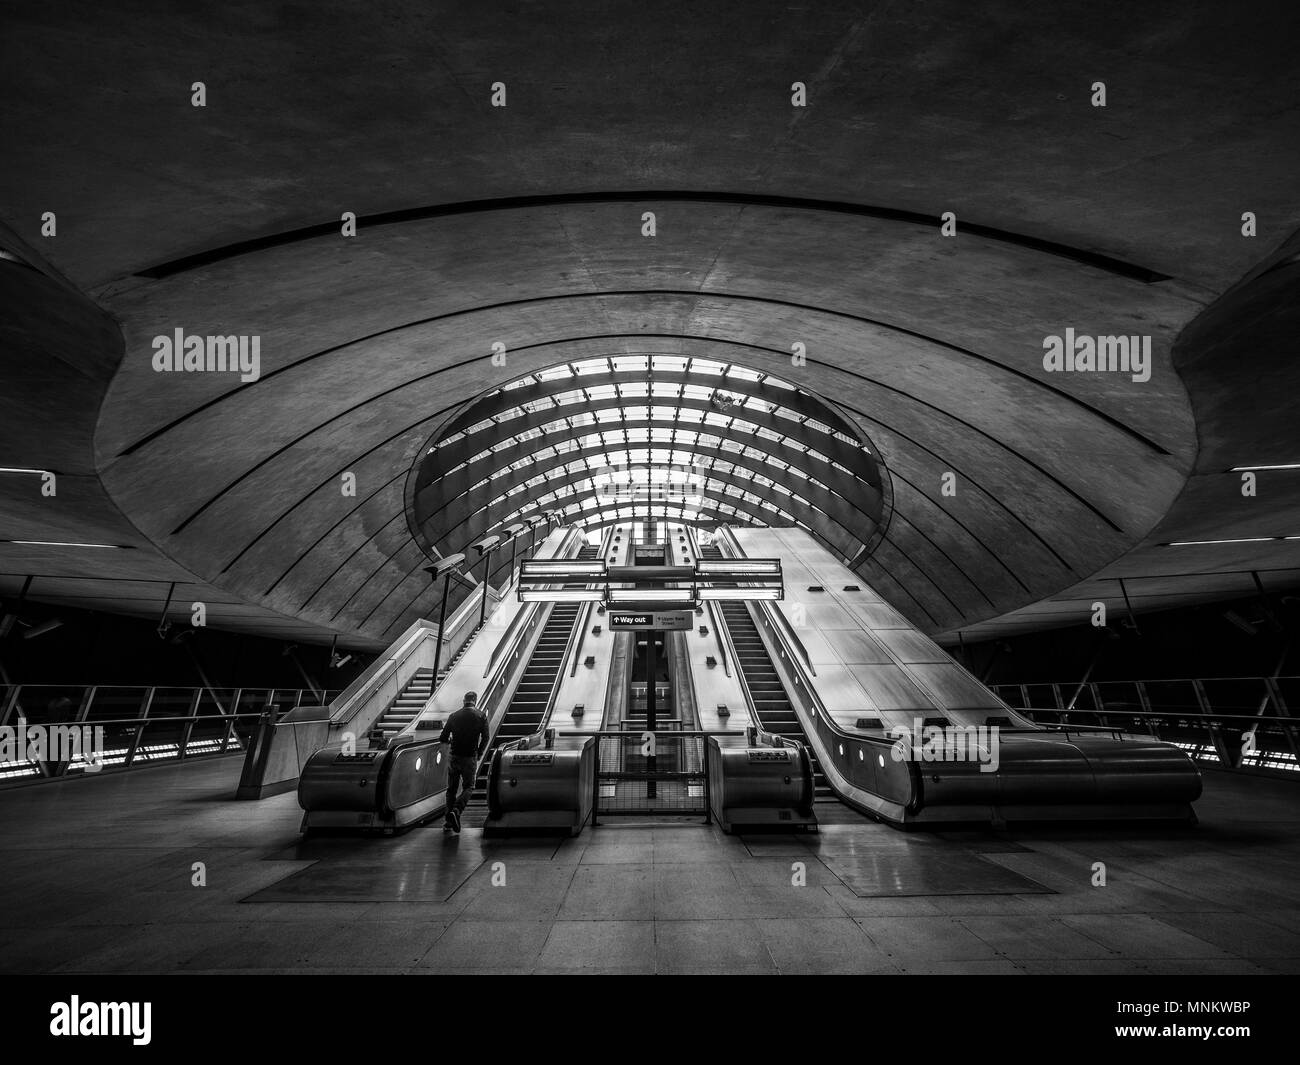 Escalators in entrance to Jubilee line tube station, Canary Wharf, London, UK. Stock Photo